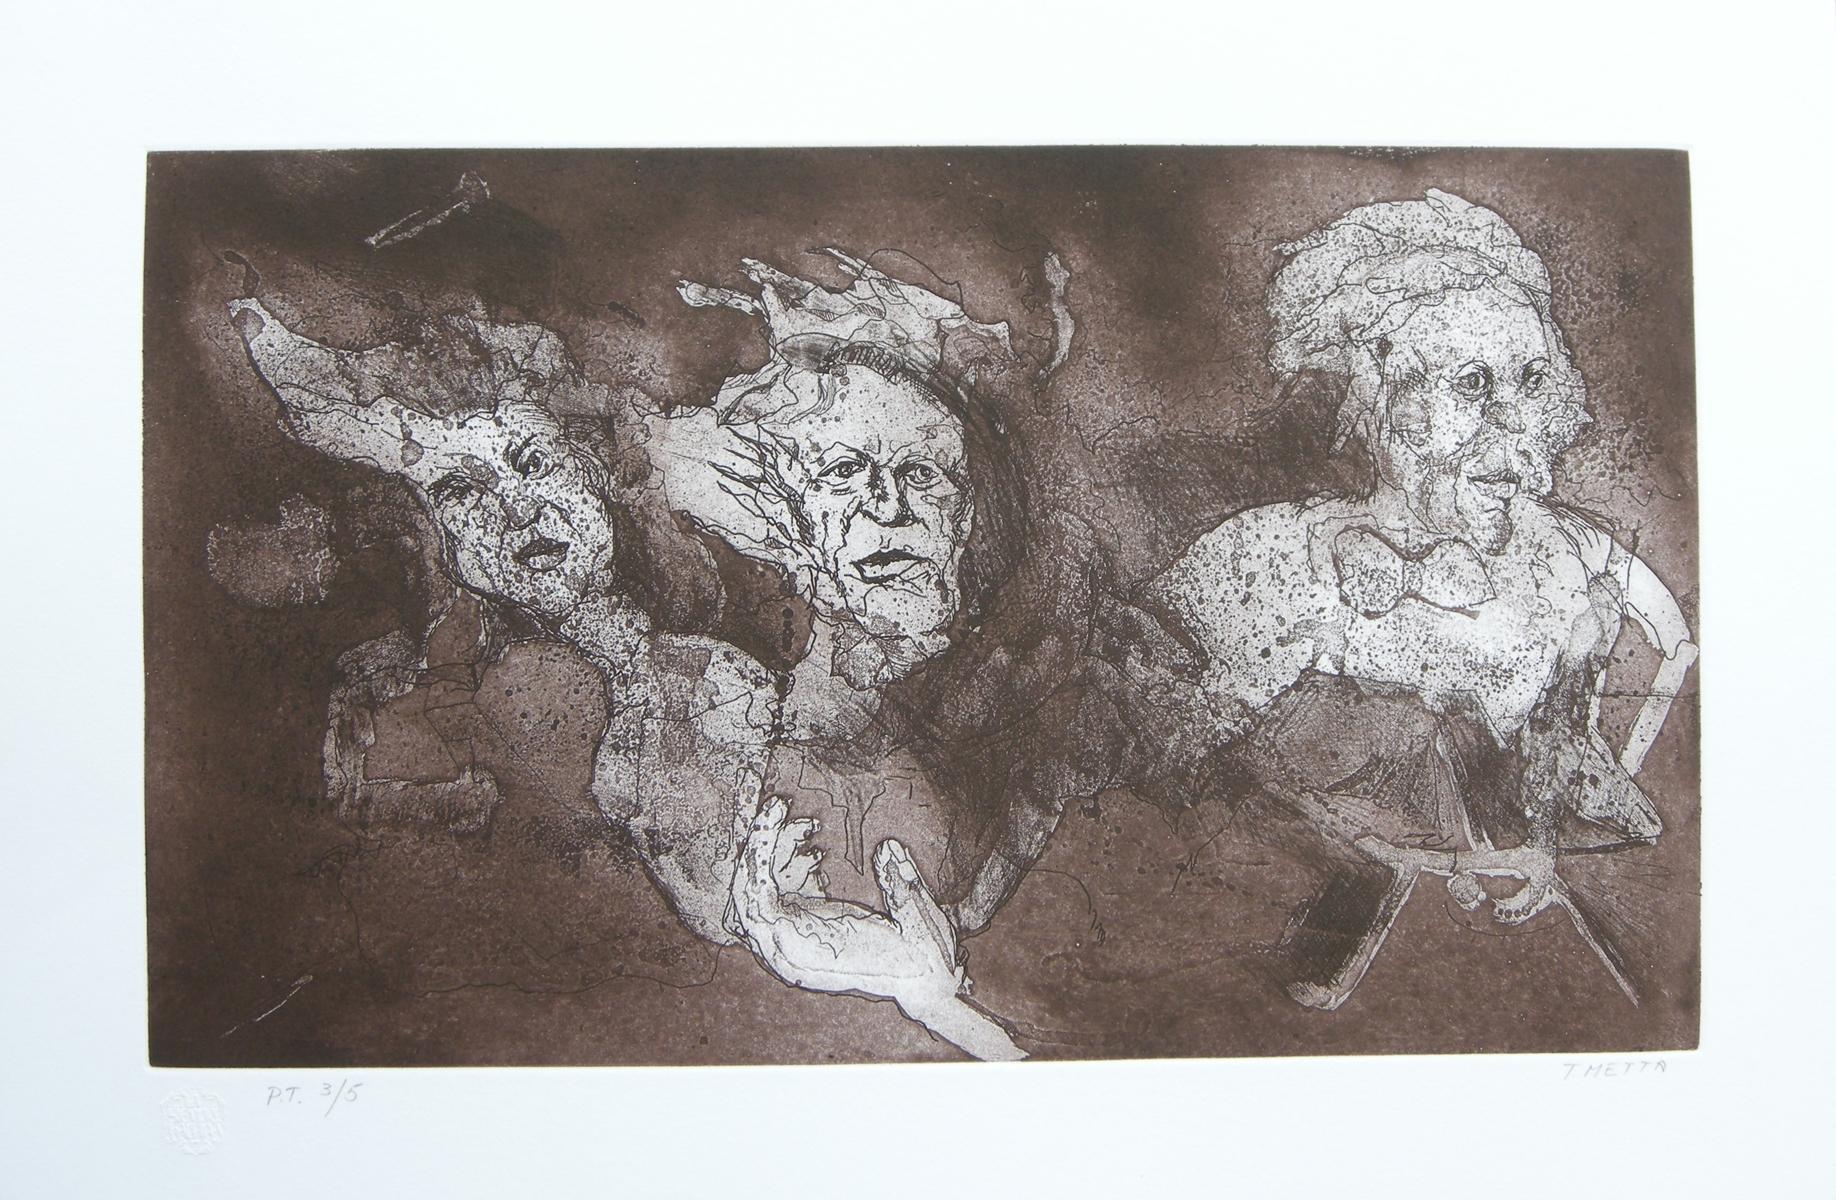 Tere Metta (Mexico, )
'Untitled', 2002
etching, aquatint on paper Guarro Biblos 250g.
15.6 x 23.7 in. (39.5 x 60 cm.)
ID: MET-103
Unframed